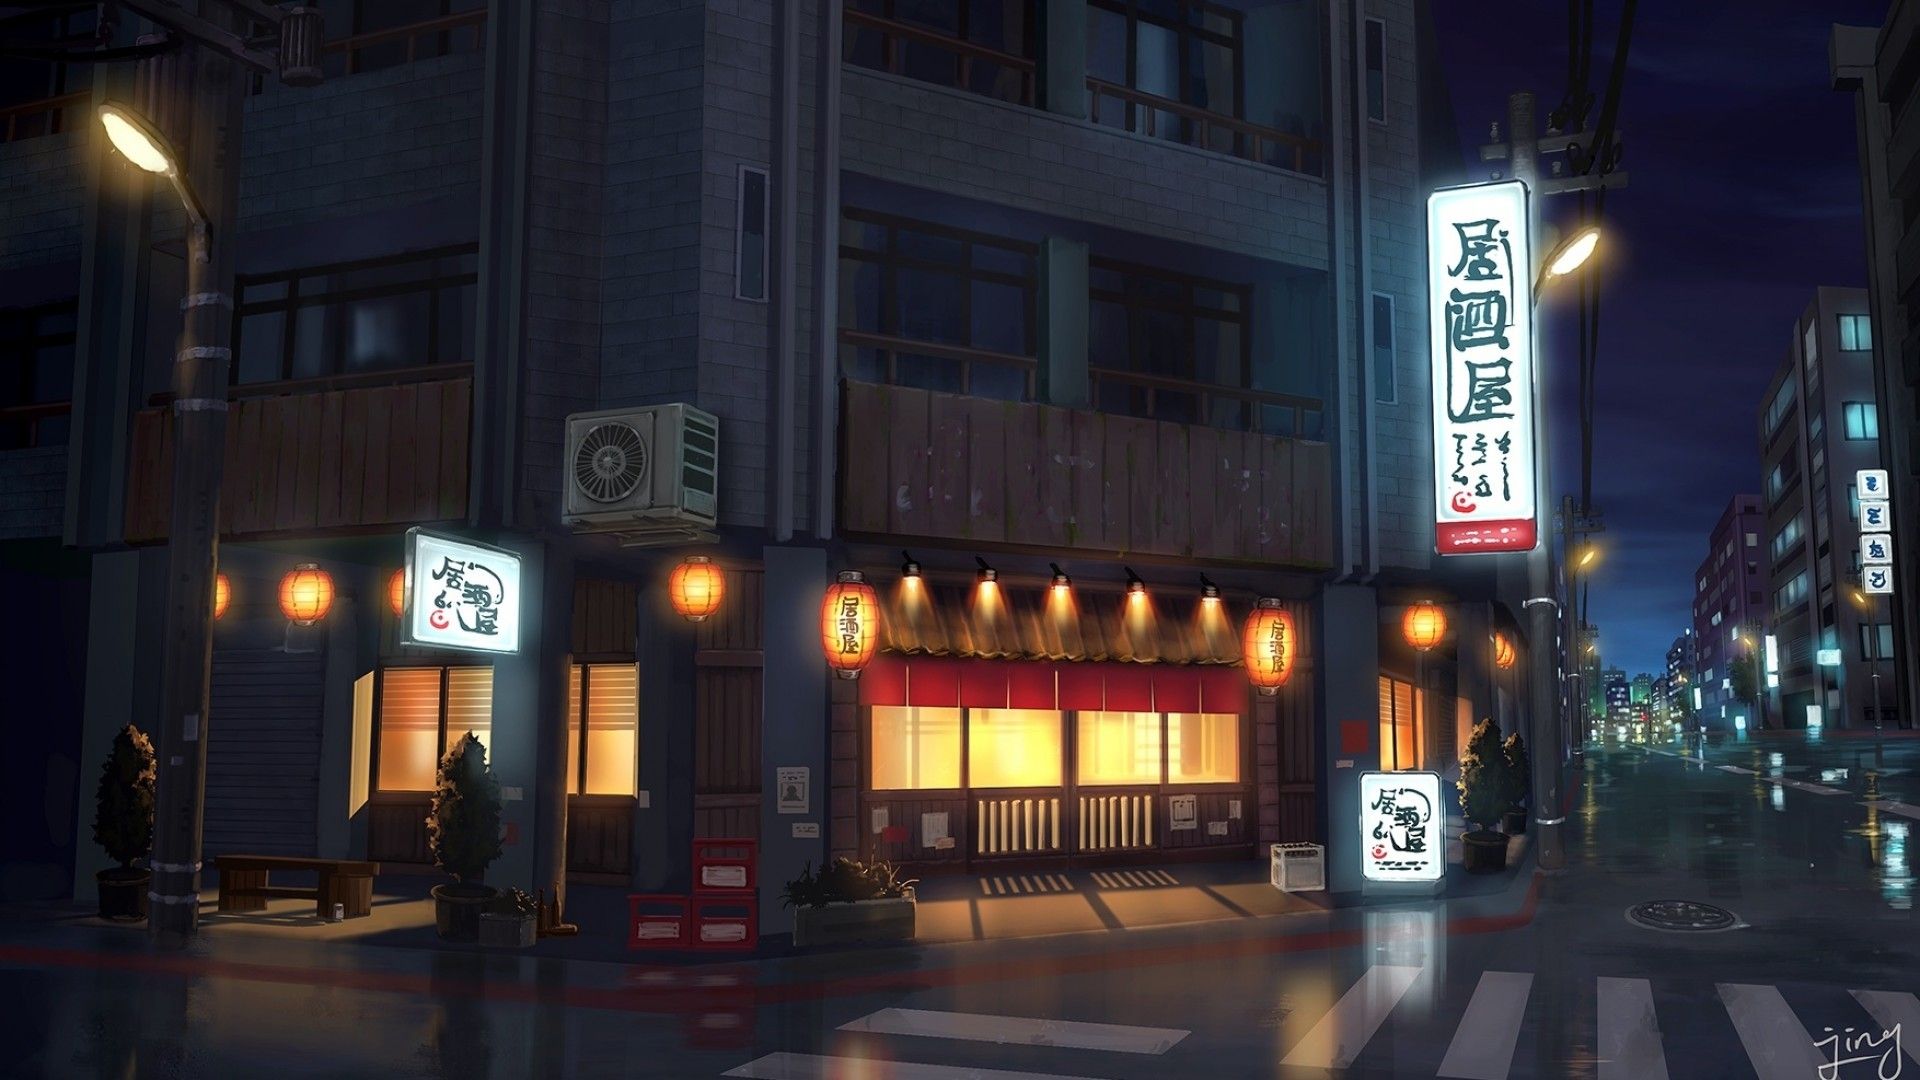 Anime Street Night Wallpaper Free Anime Street Night Background